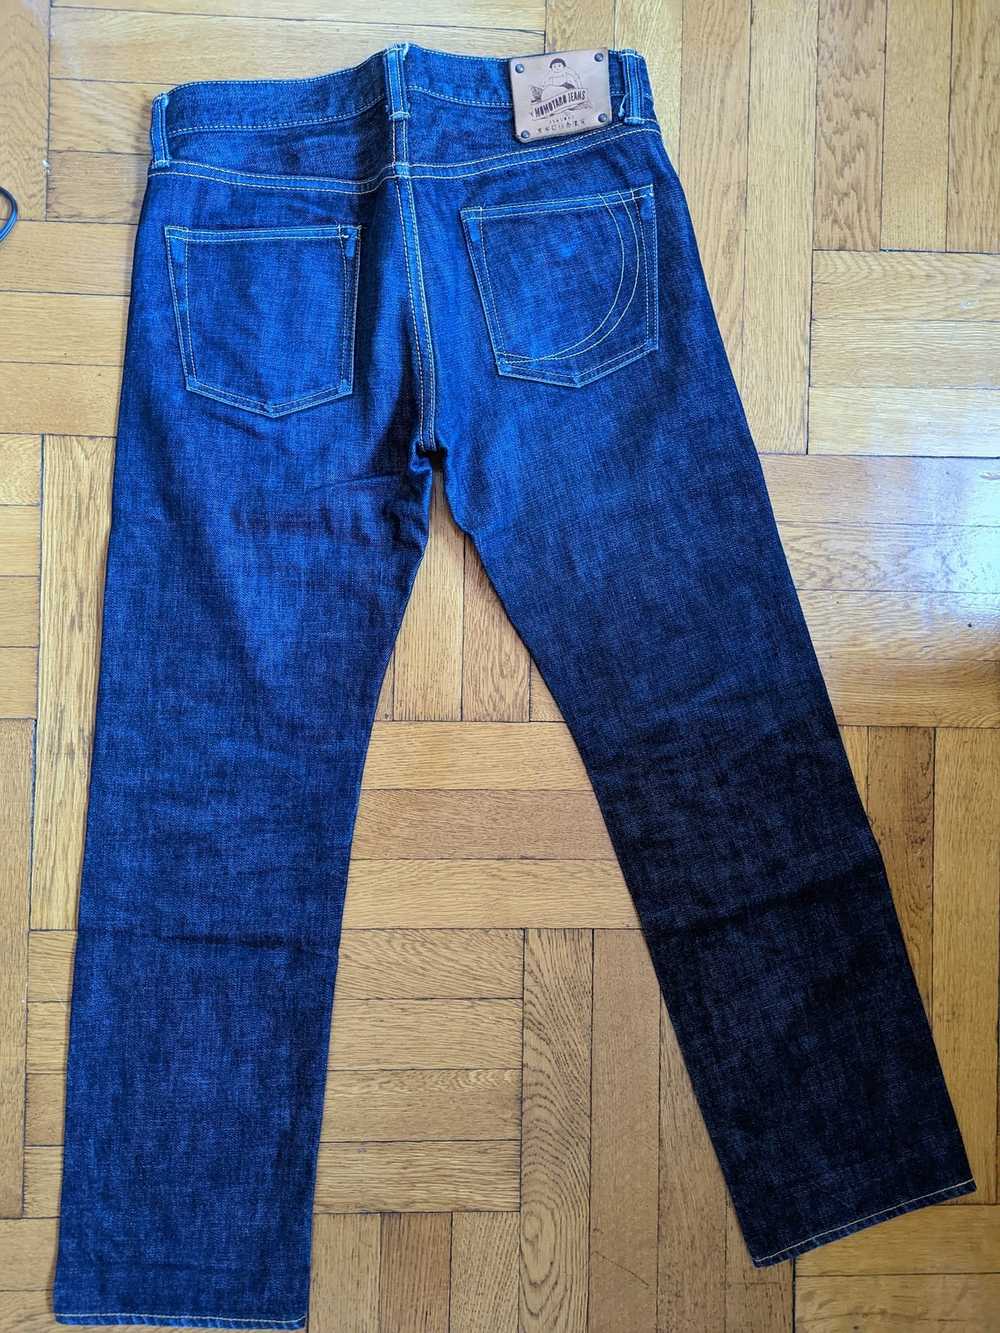 Momotaro jeans g015-mz copper - Gem